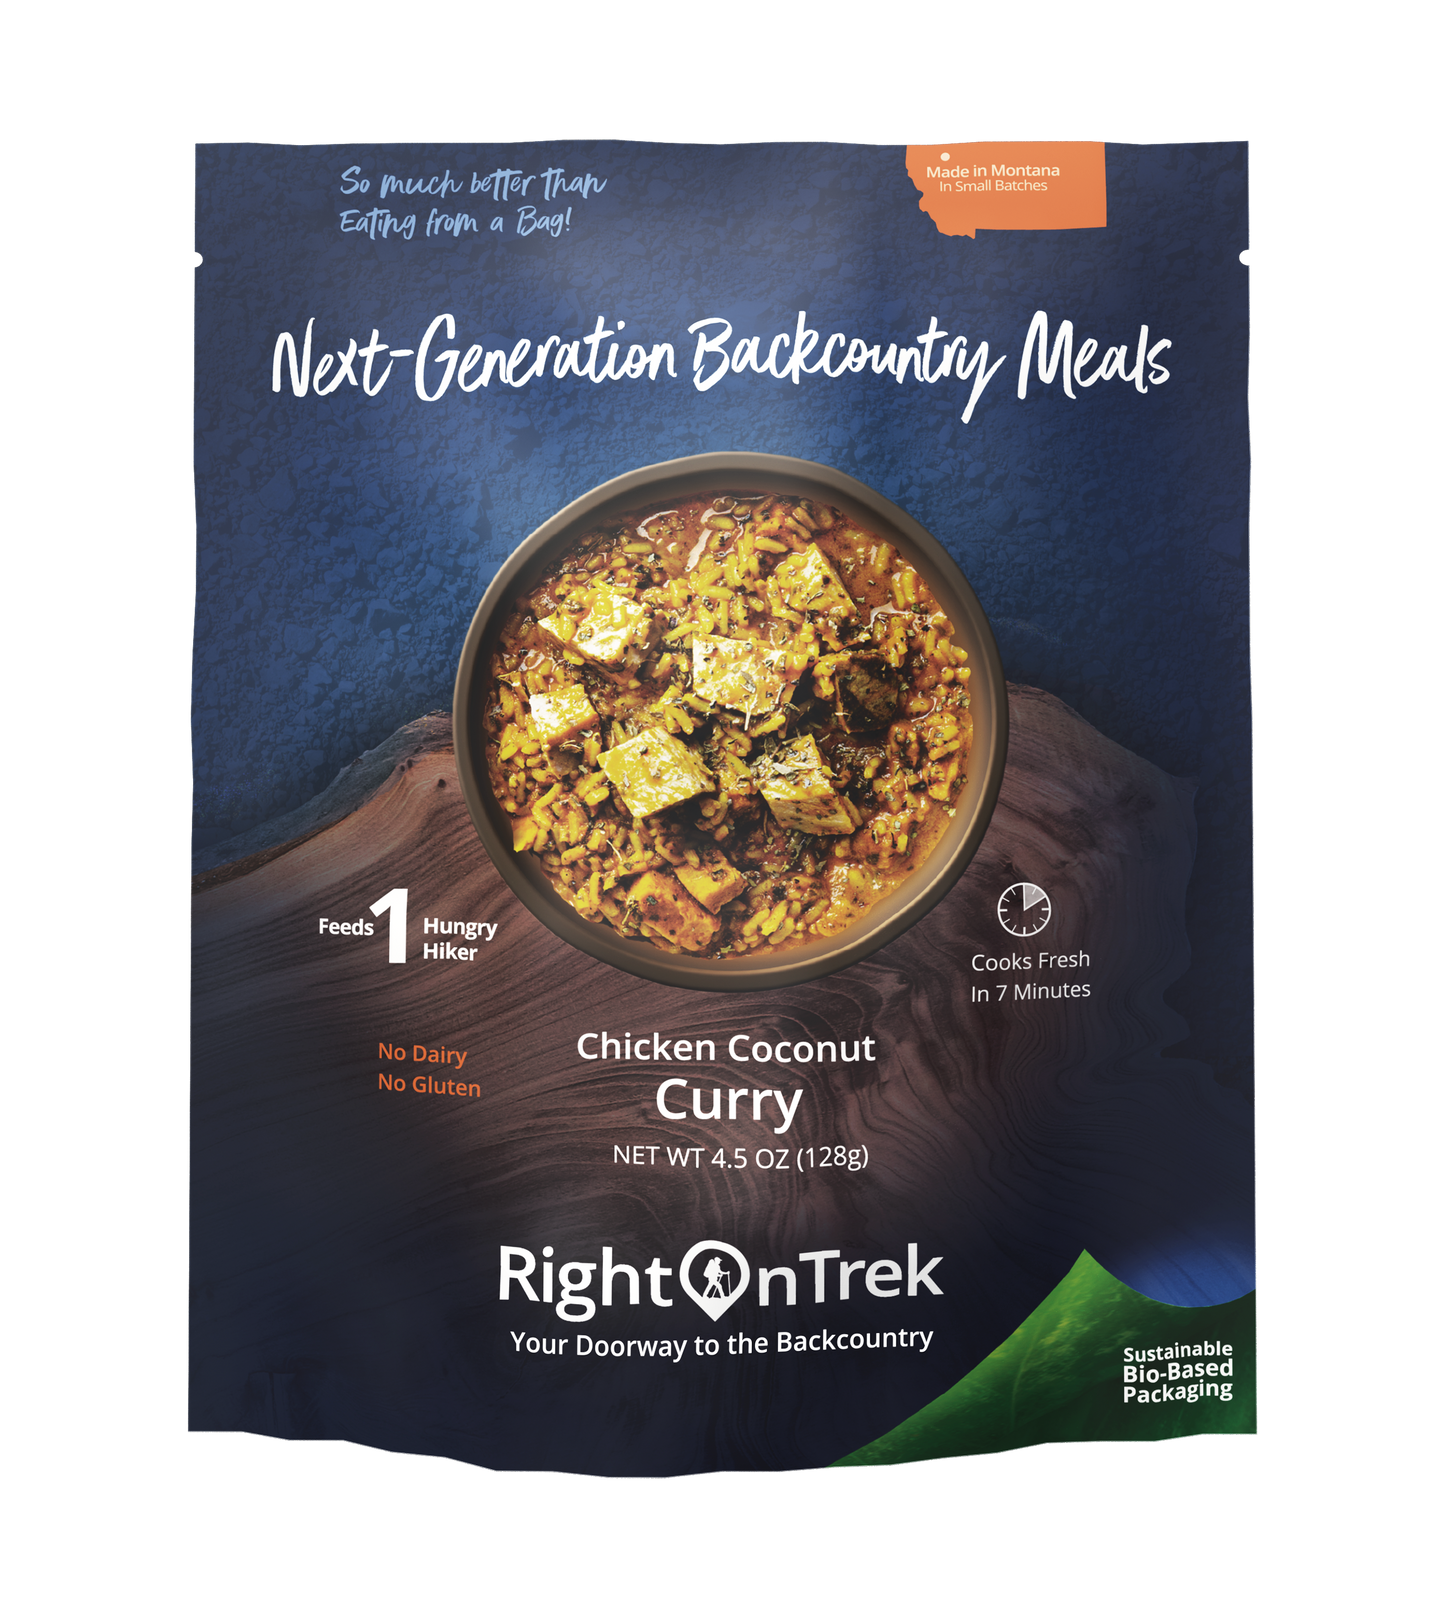 RightOnTrek chicken coconut curry feeds 1 person